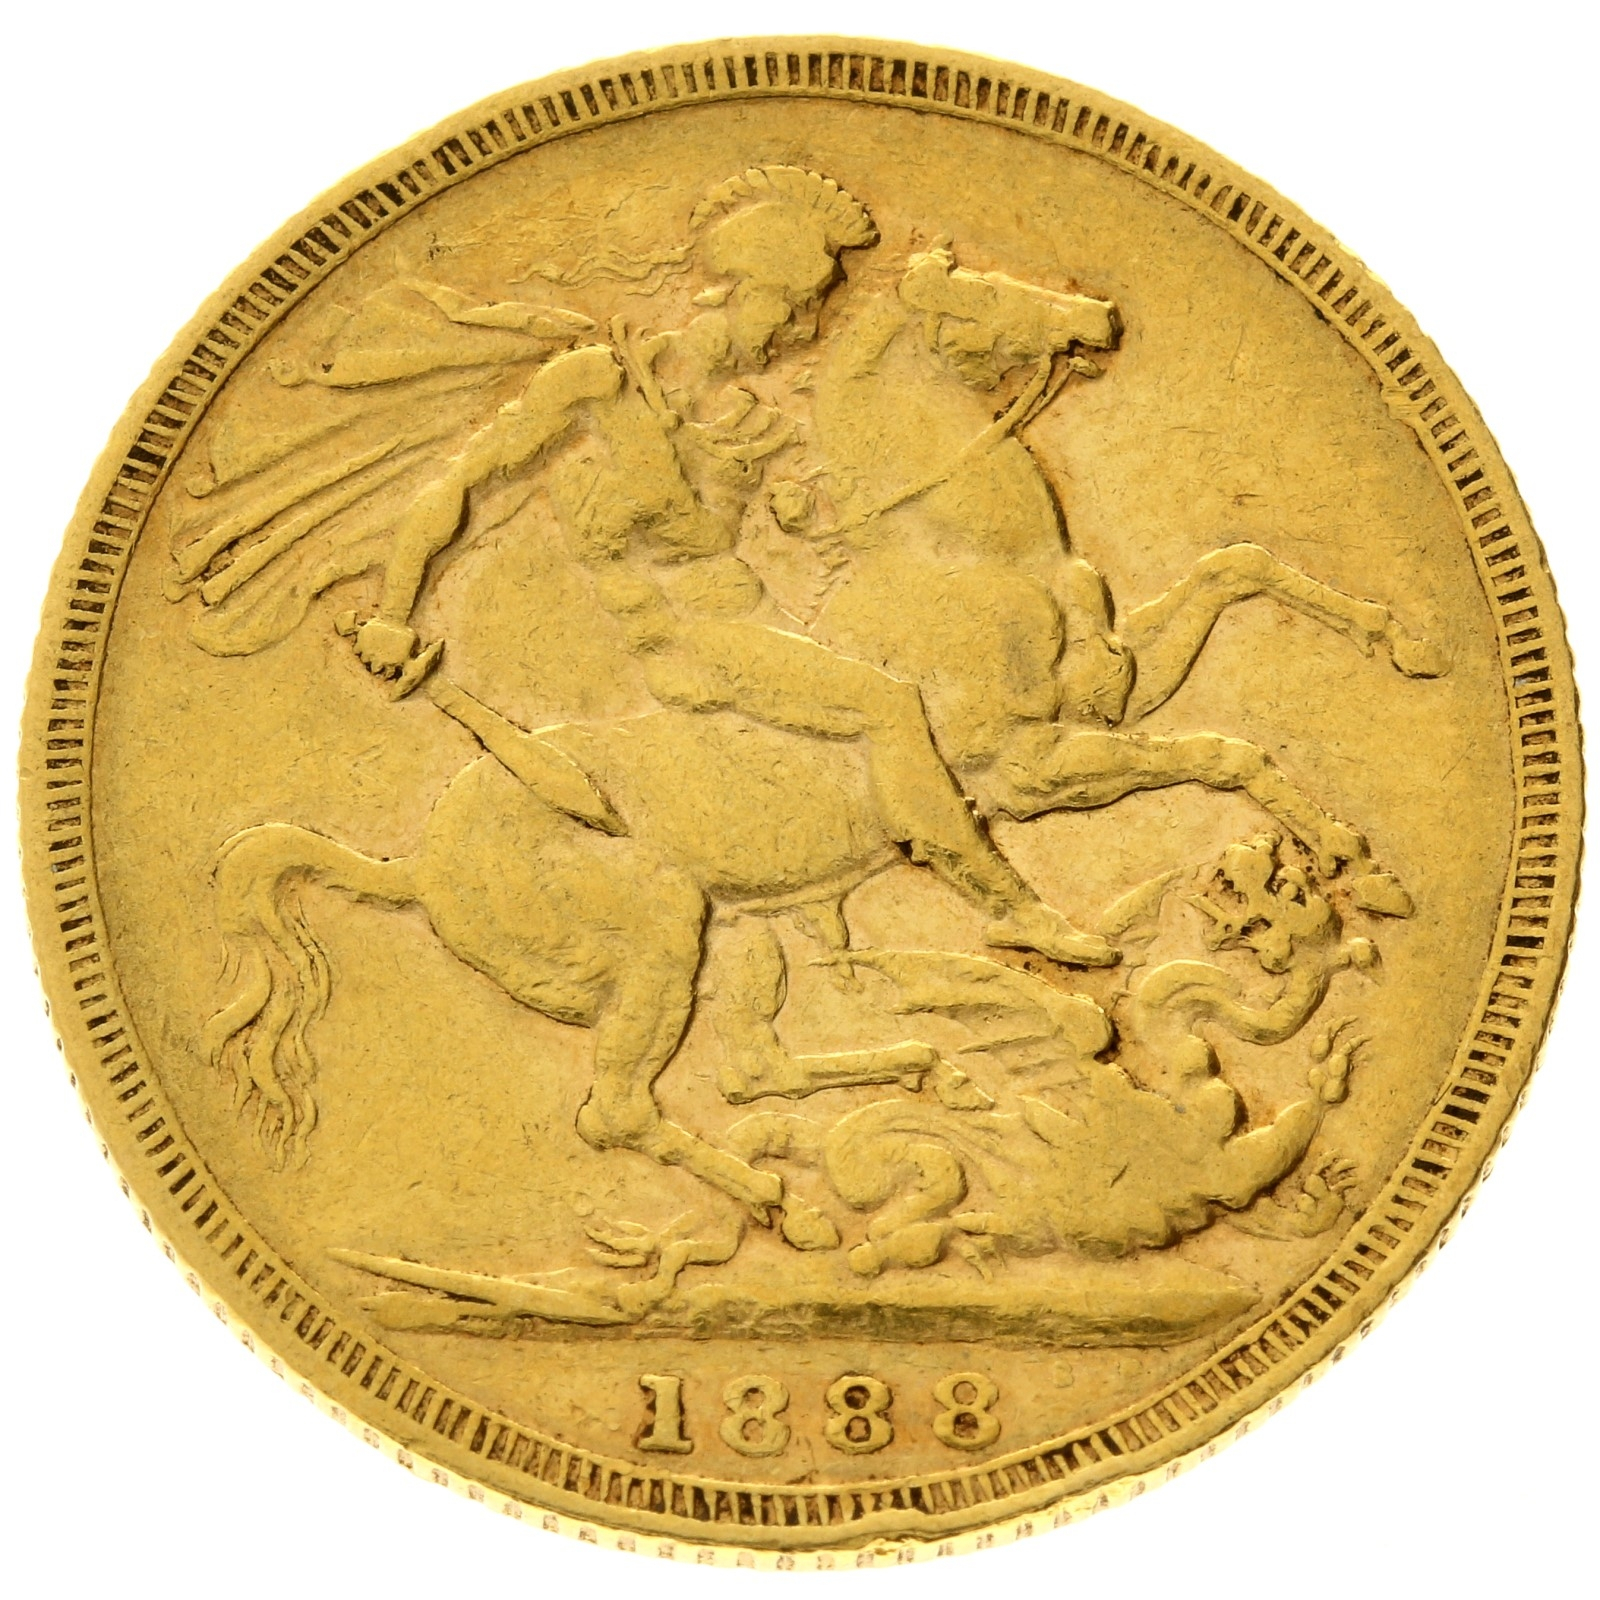 United Kingdom - 1 Sovereign - 1888 - Victoria 